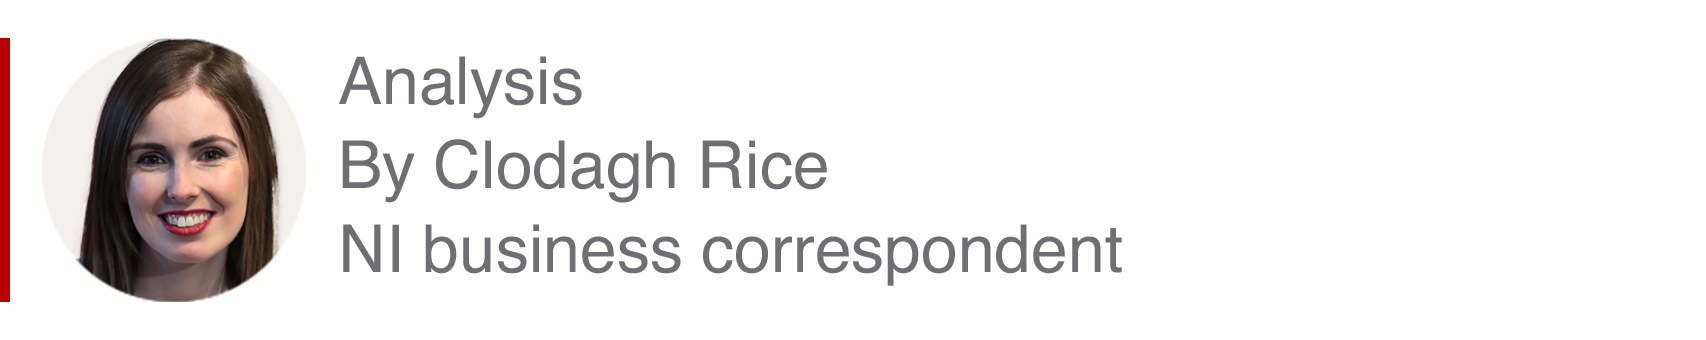 Analysis box by Clodagh Rice, NI business correspondent